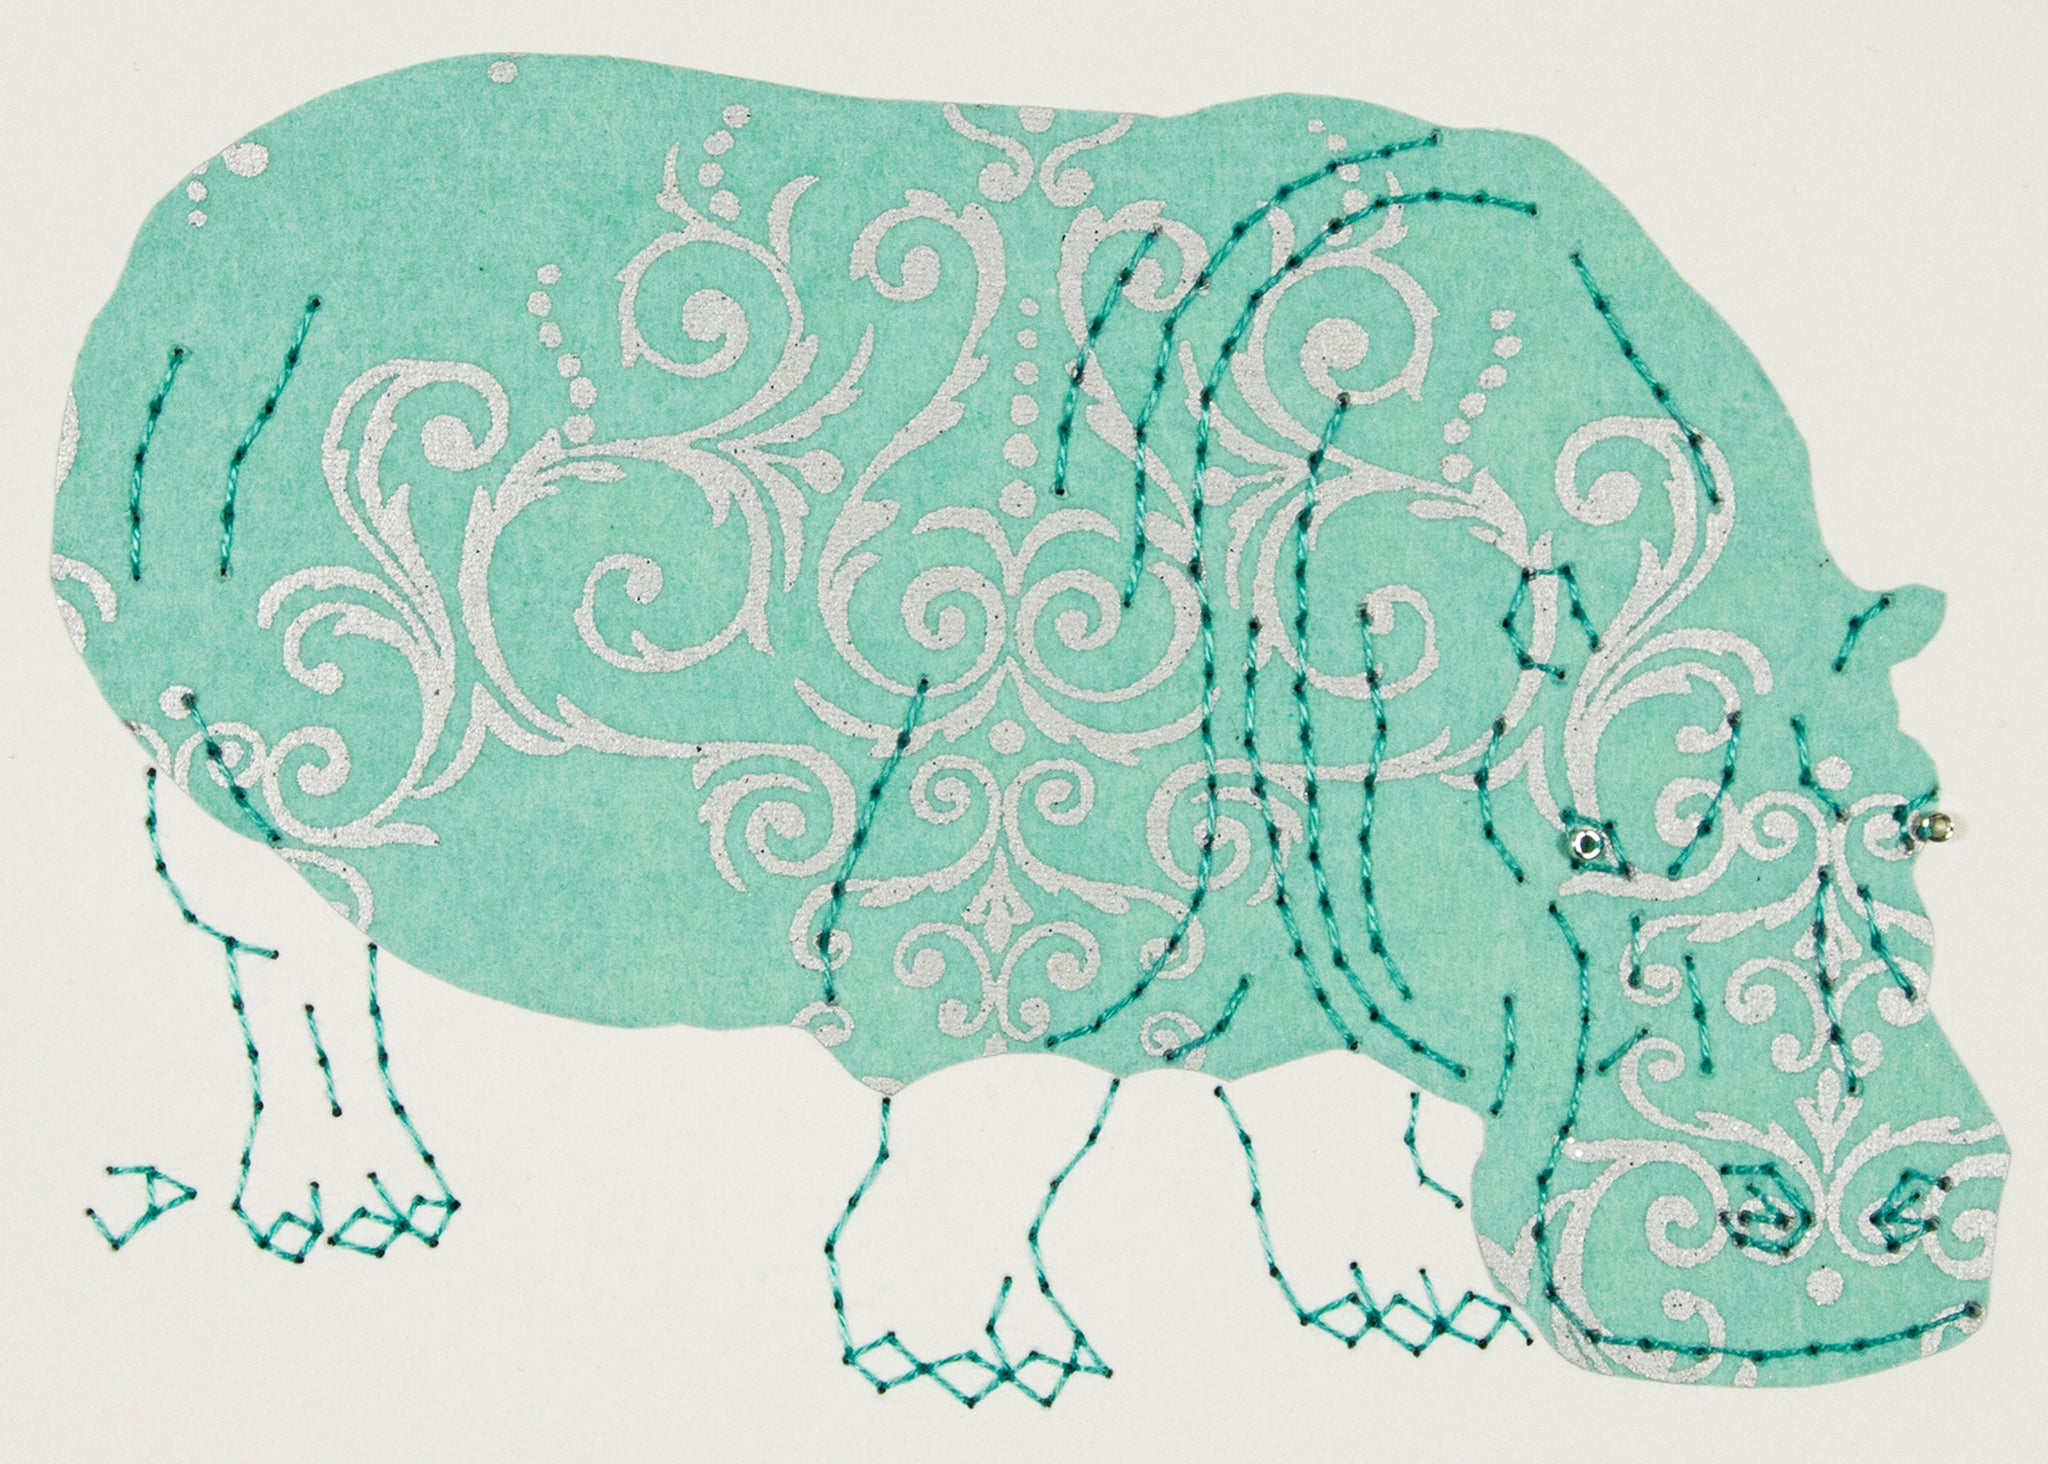 Hippopotamus in Silver Filigree on Pale Turquoise